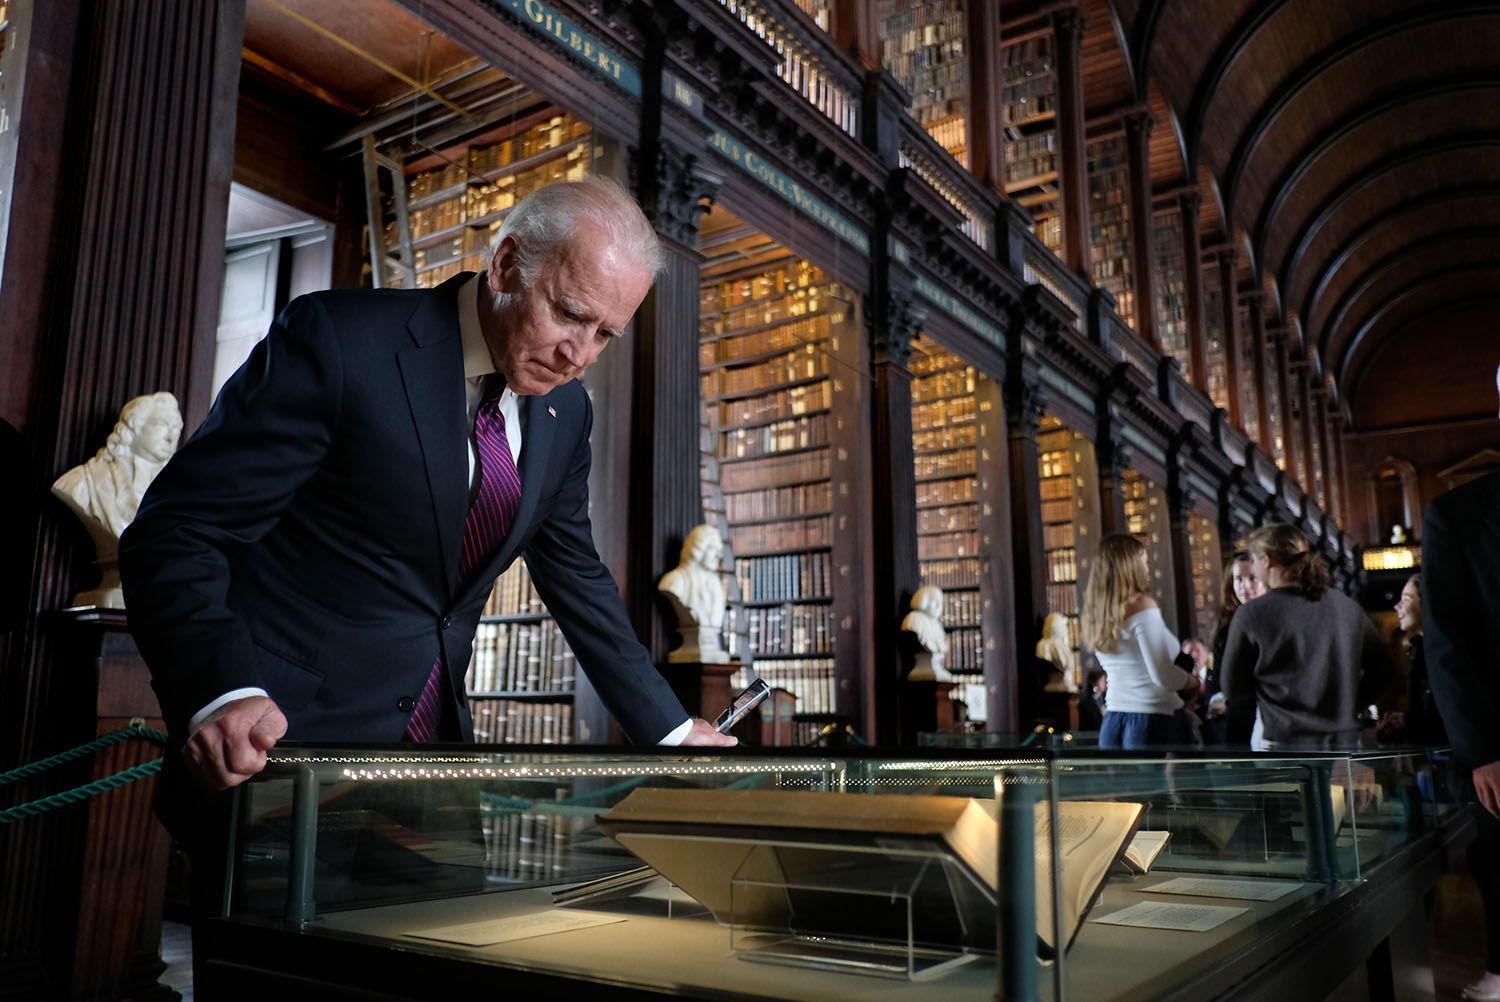 Vice President Joe Biden looks at James Joyce manuscripts in the Trinity College Library, in Dublin, Ireland, June 24, 2016. (Official White House Photo by David Lienemann)